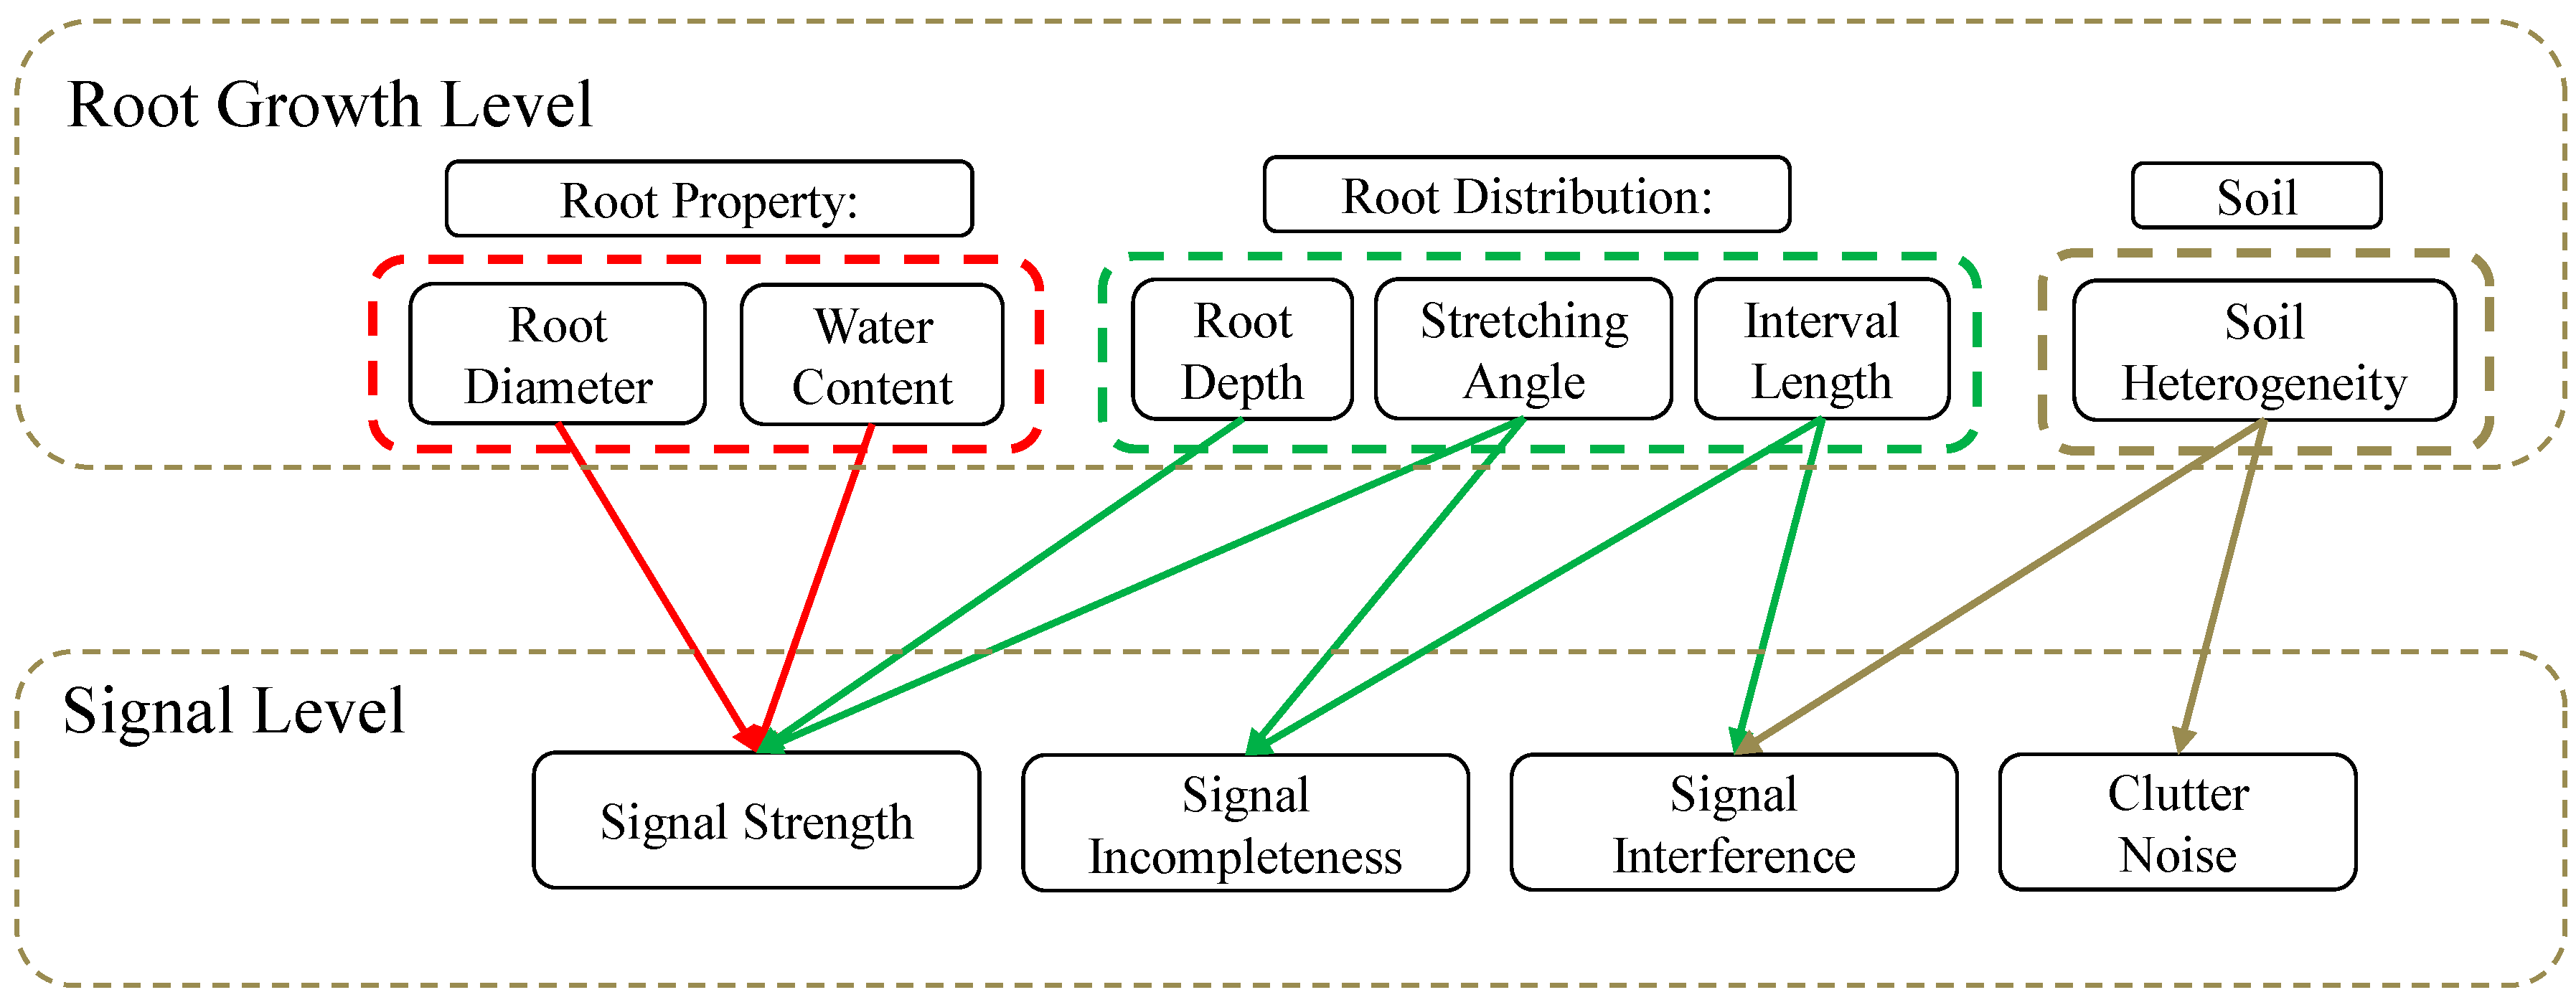 Tree Root Depth Chart